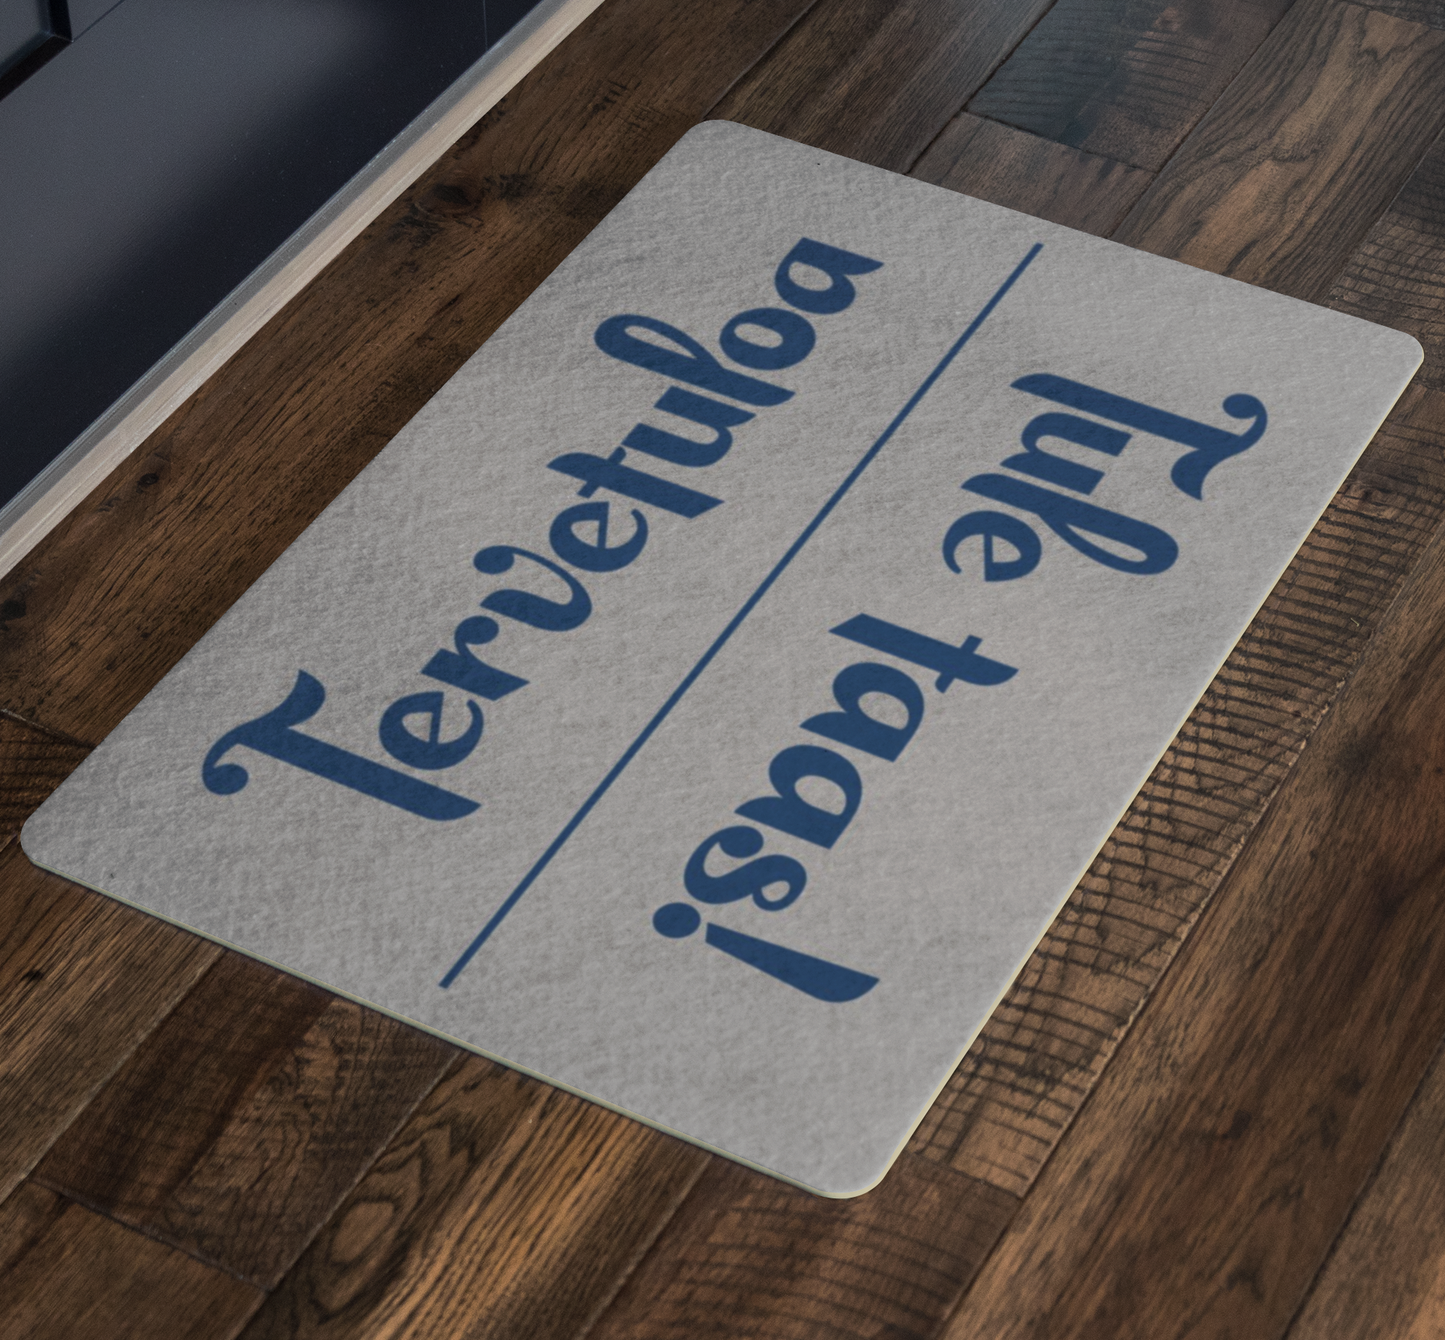 Tervetuloa (Welcome) Finnish Doormat | Tule Taas (Come Again!)